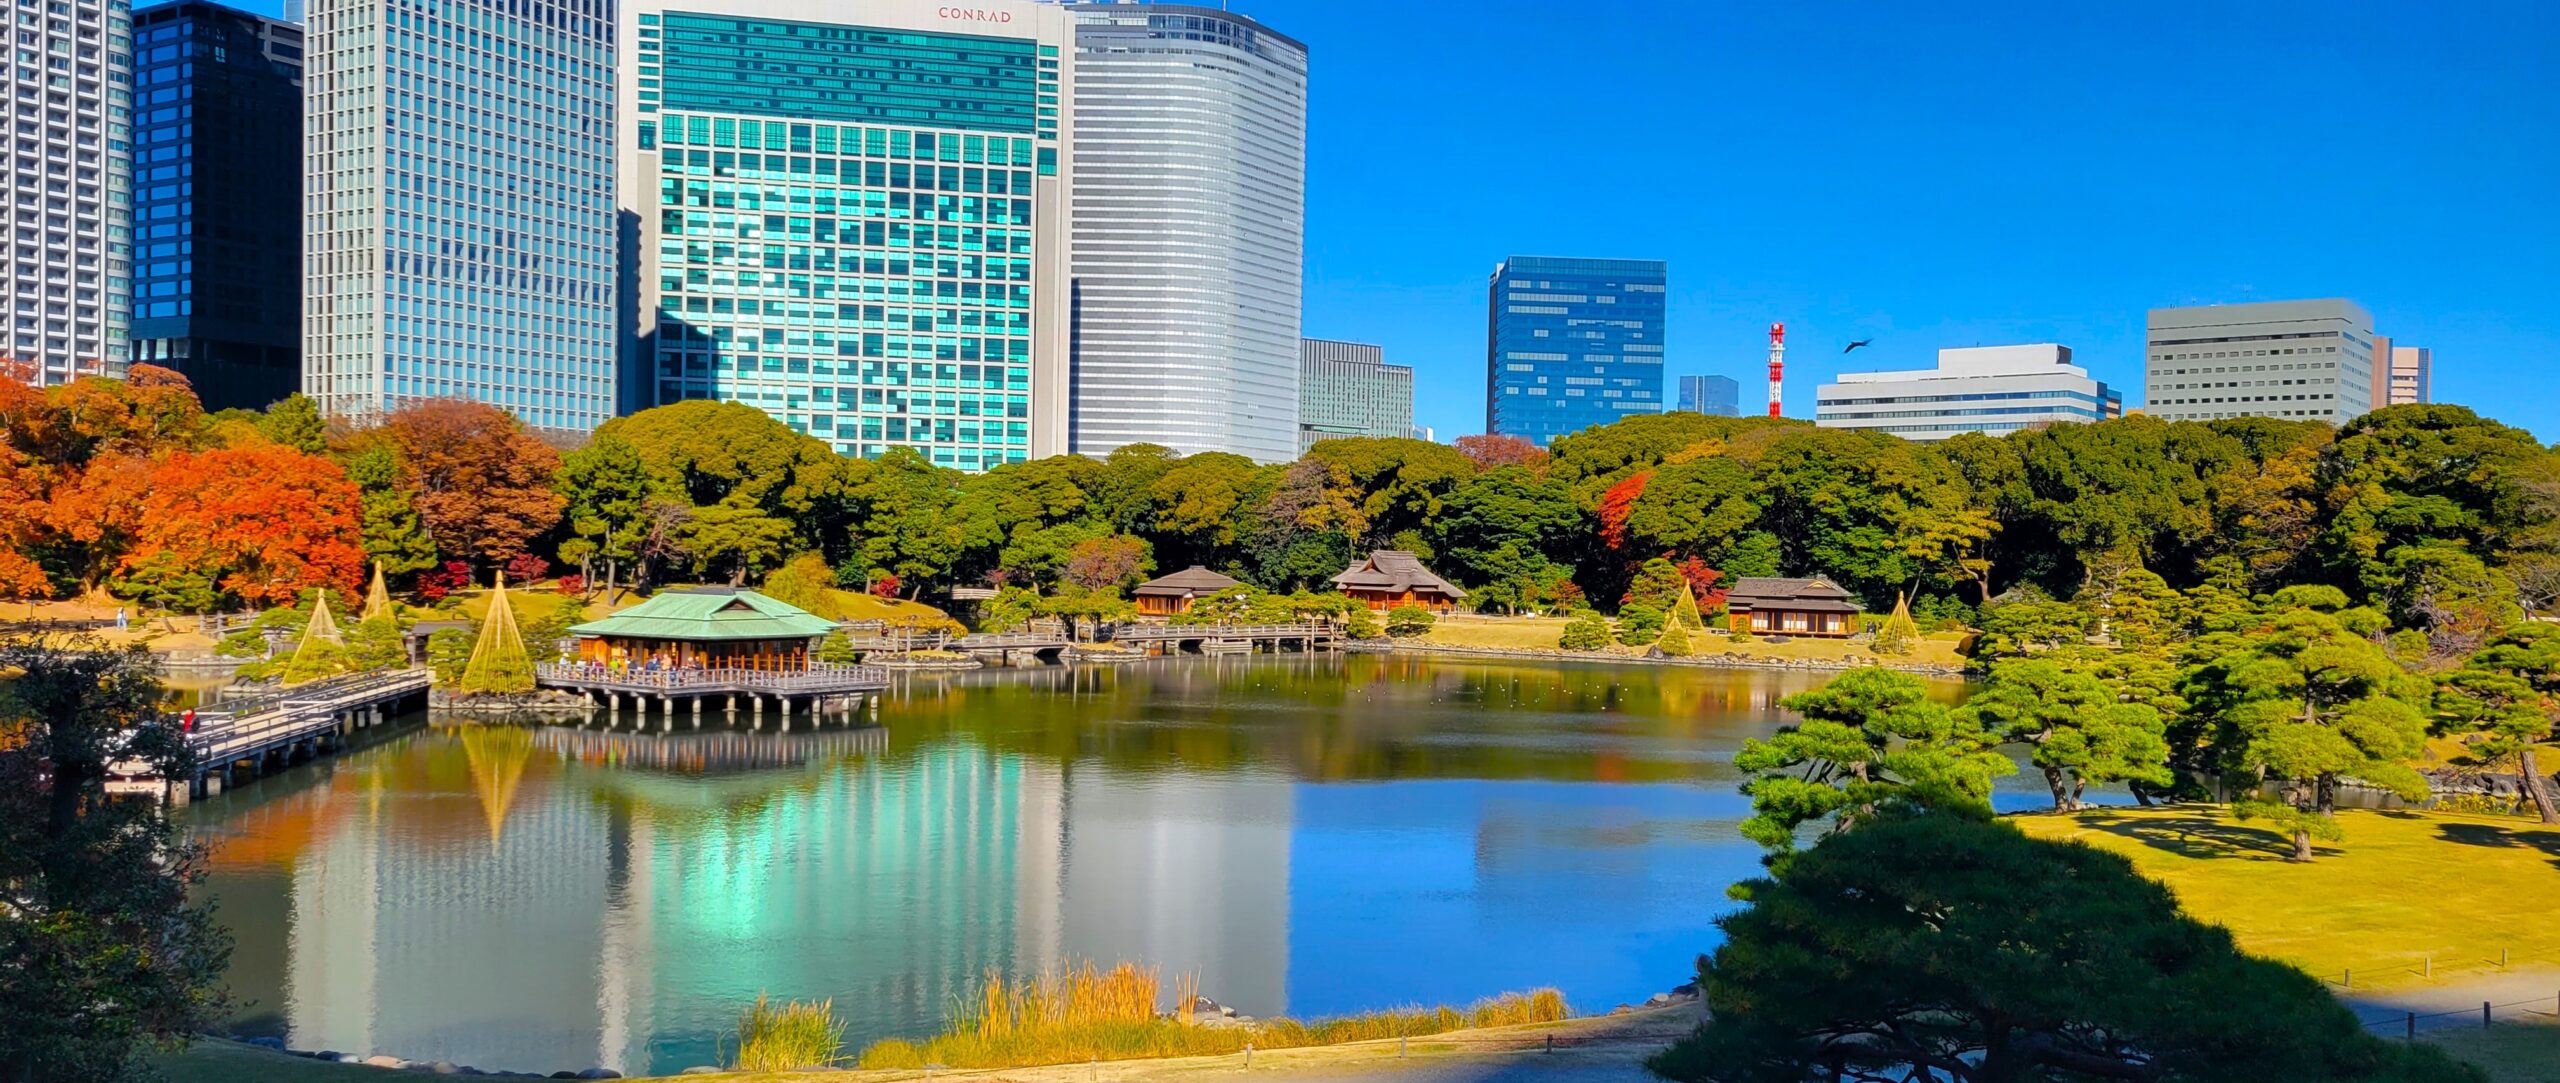 Hama-rikyu Gardens in Tokyo.